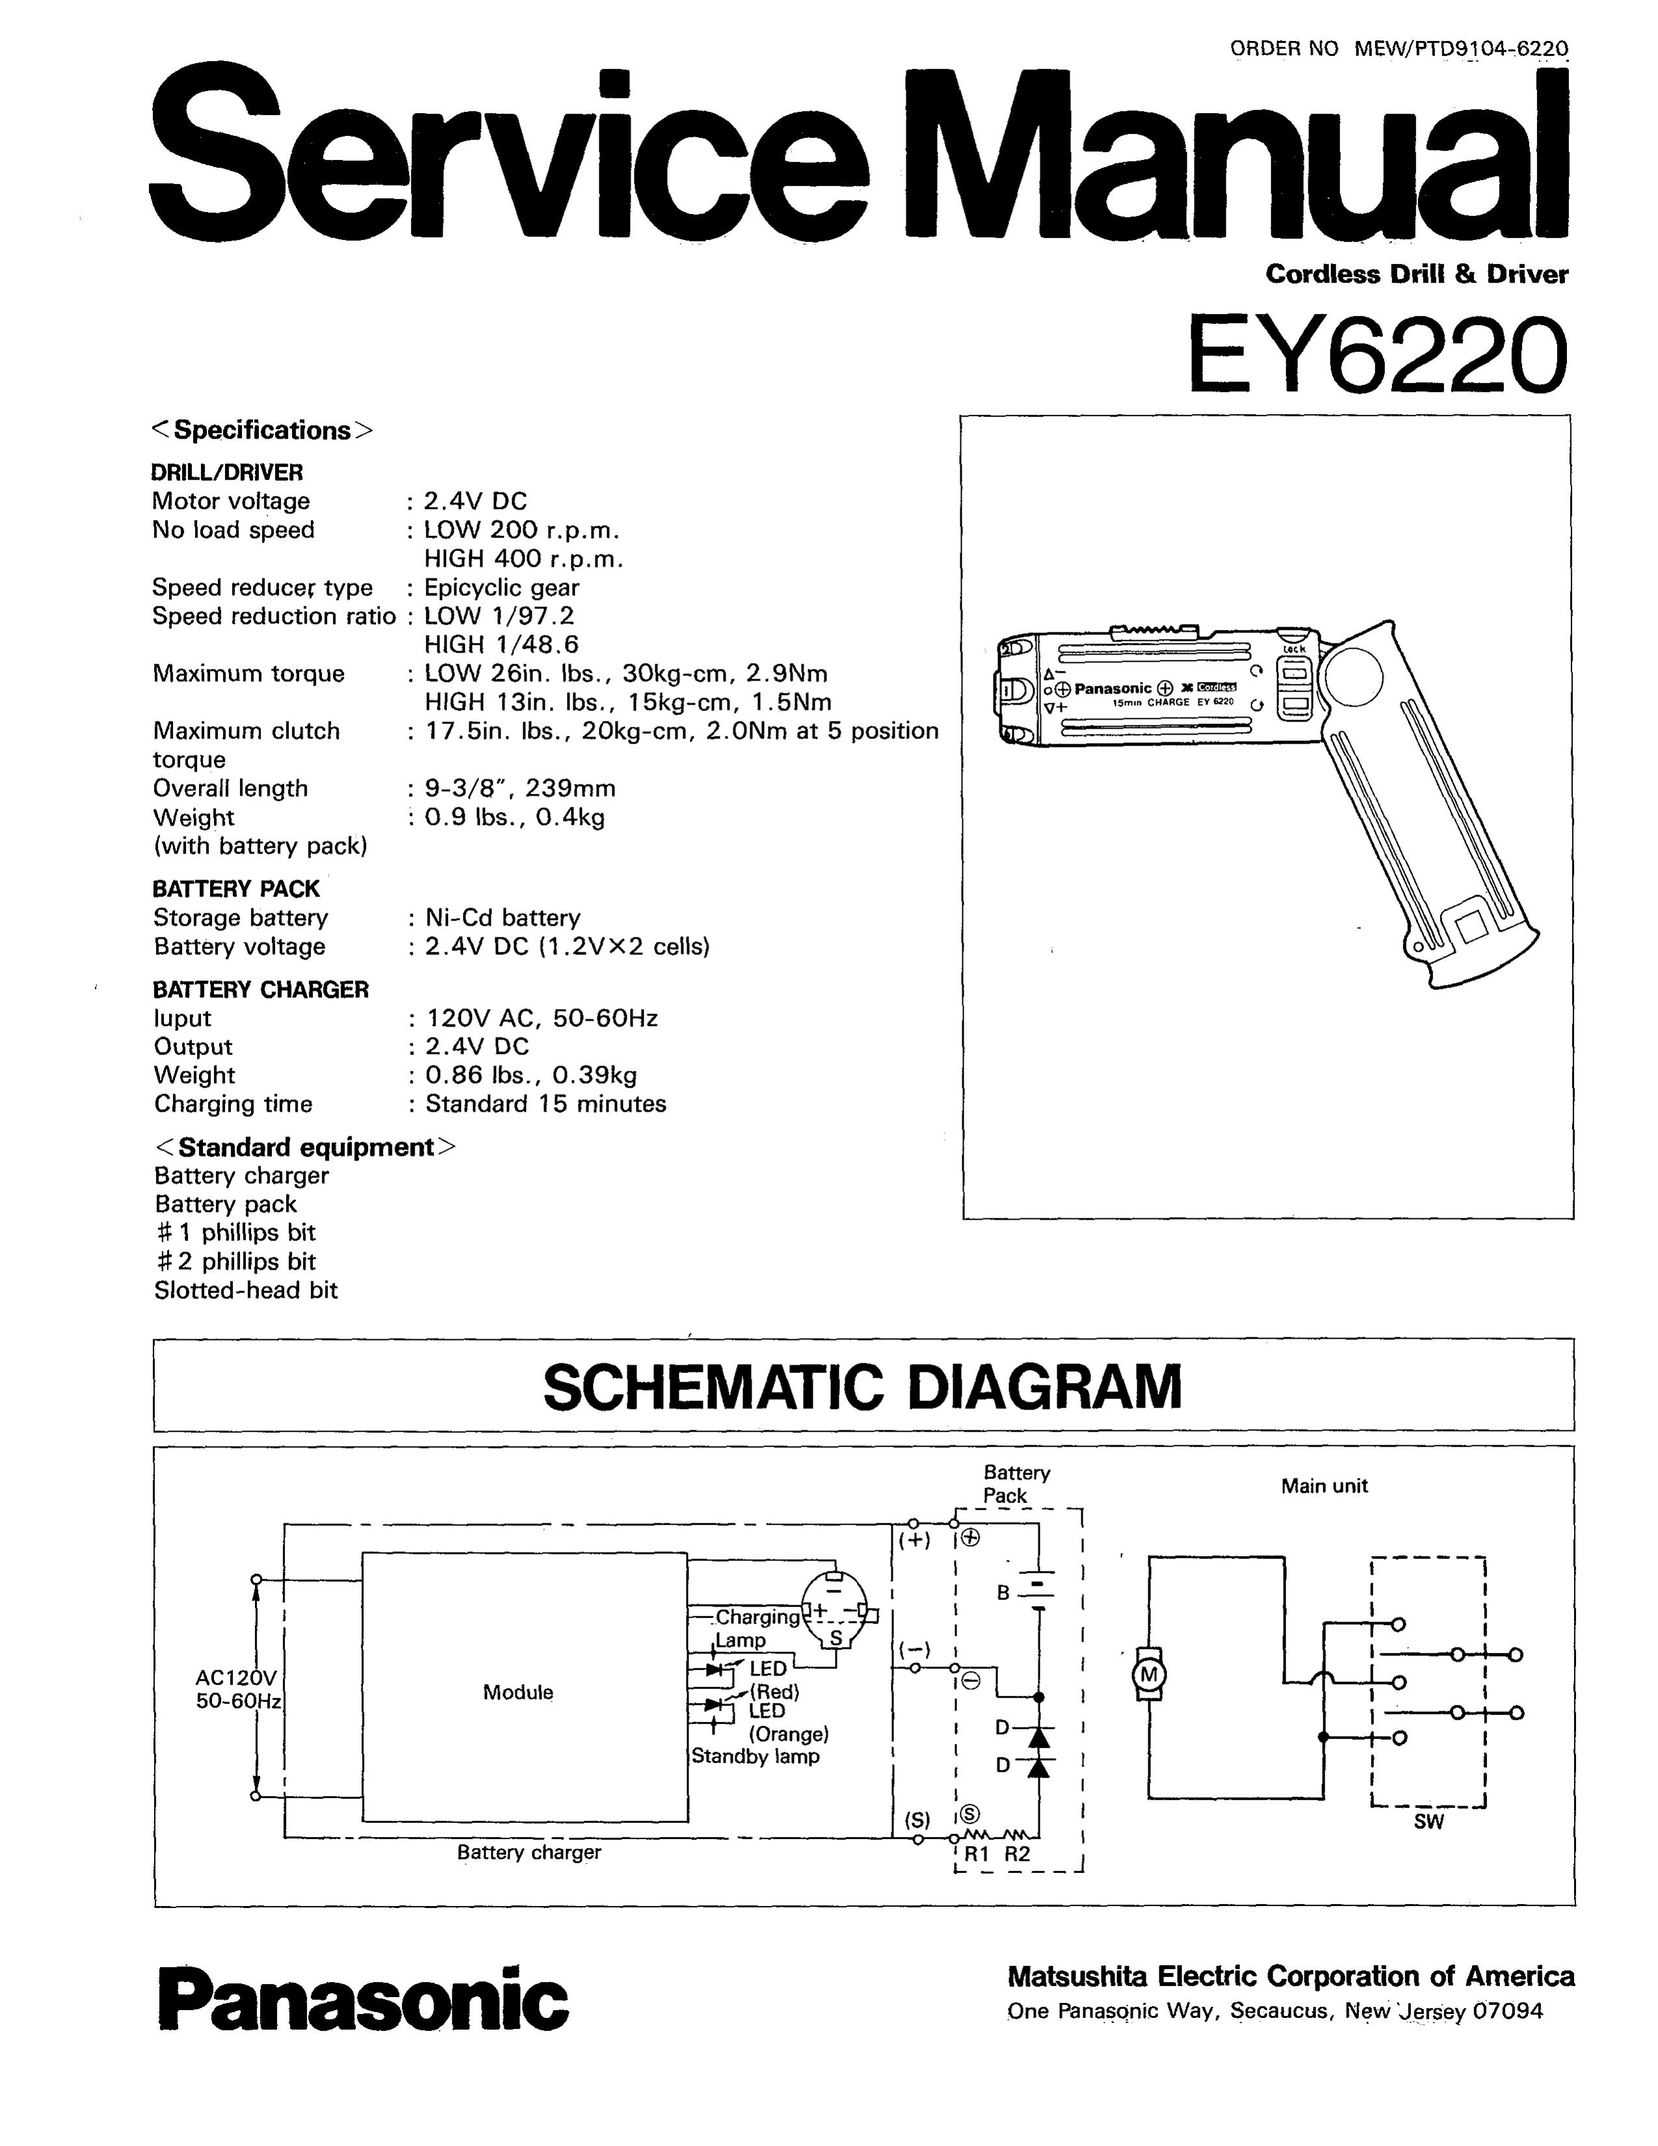 Panasonic MSW Cordless Drill User Manual